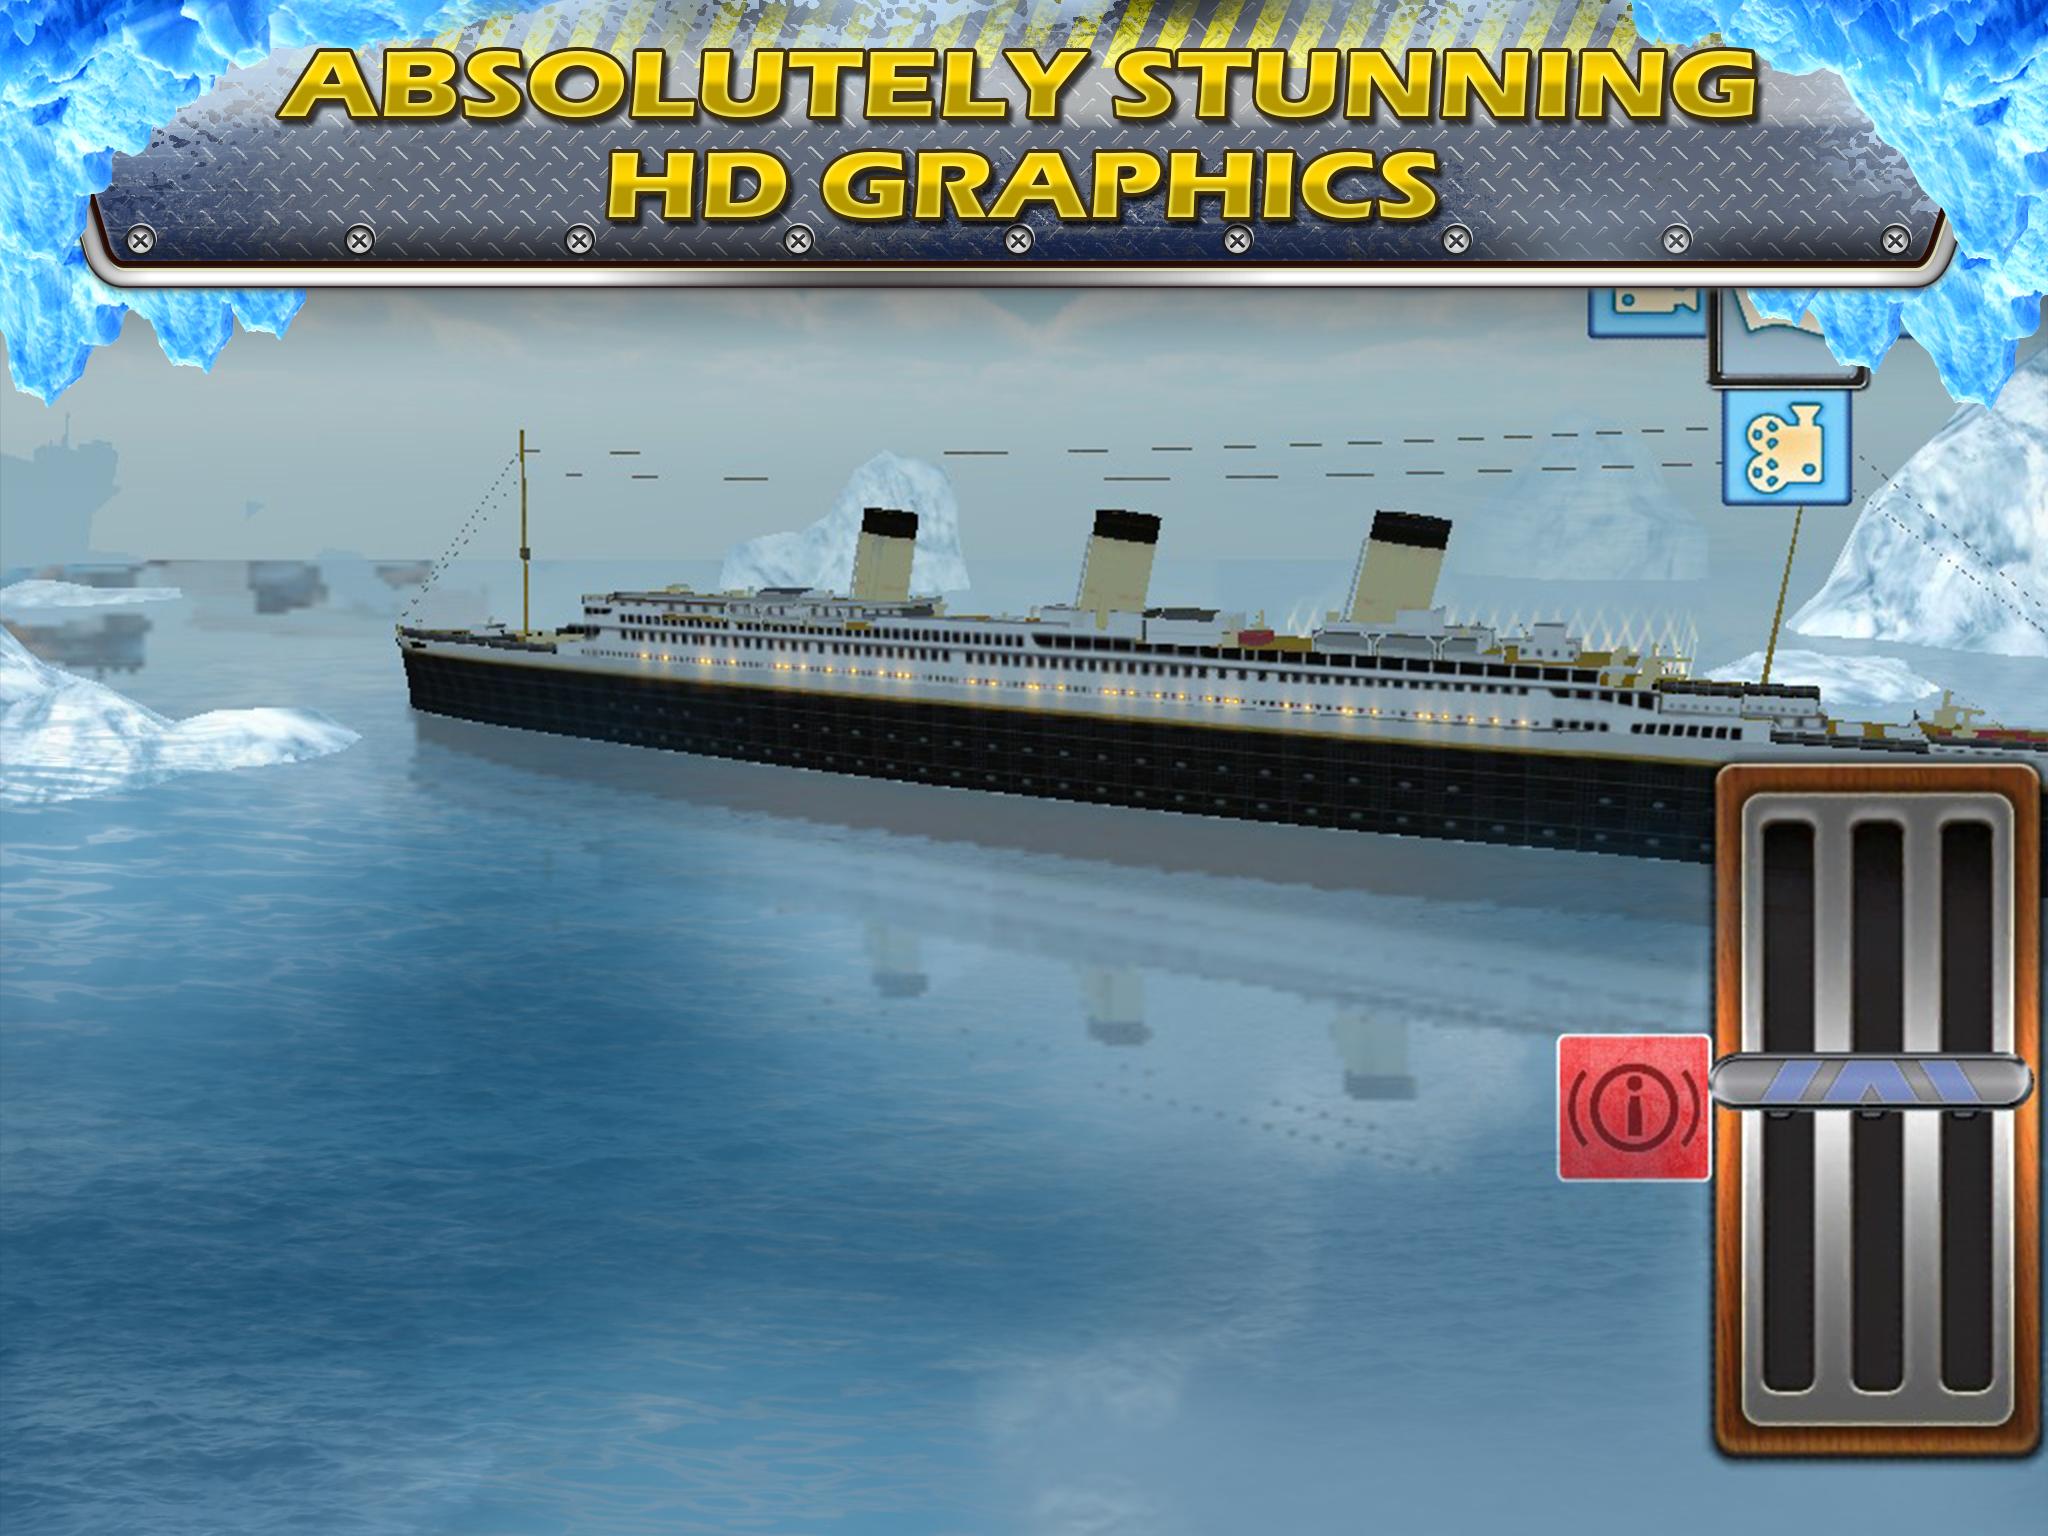 Big Ship Simulator 2015 For Android Apk Download